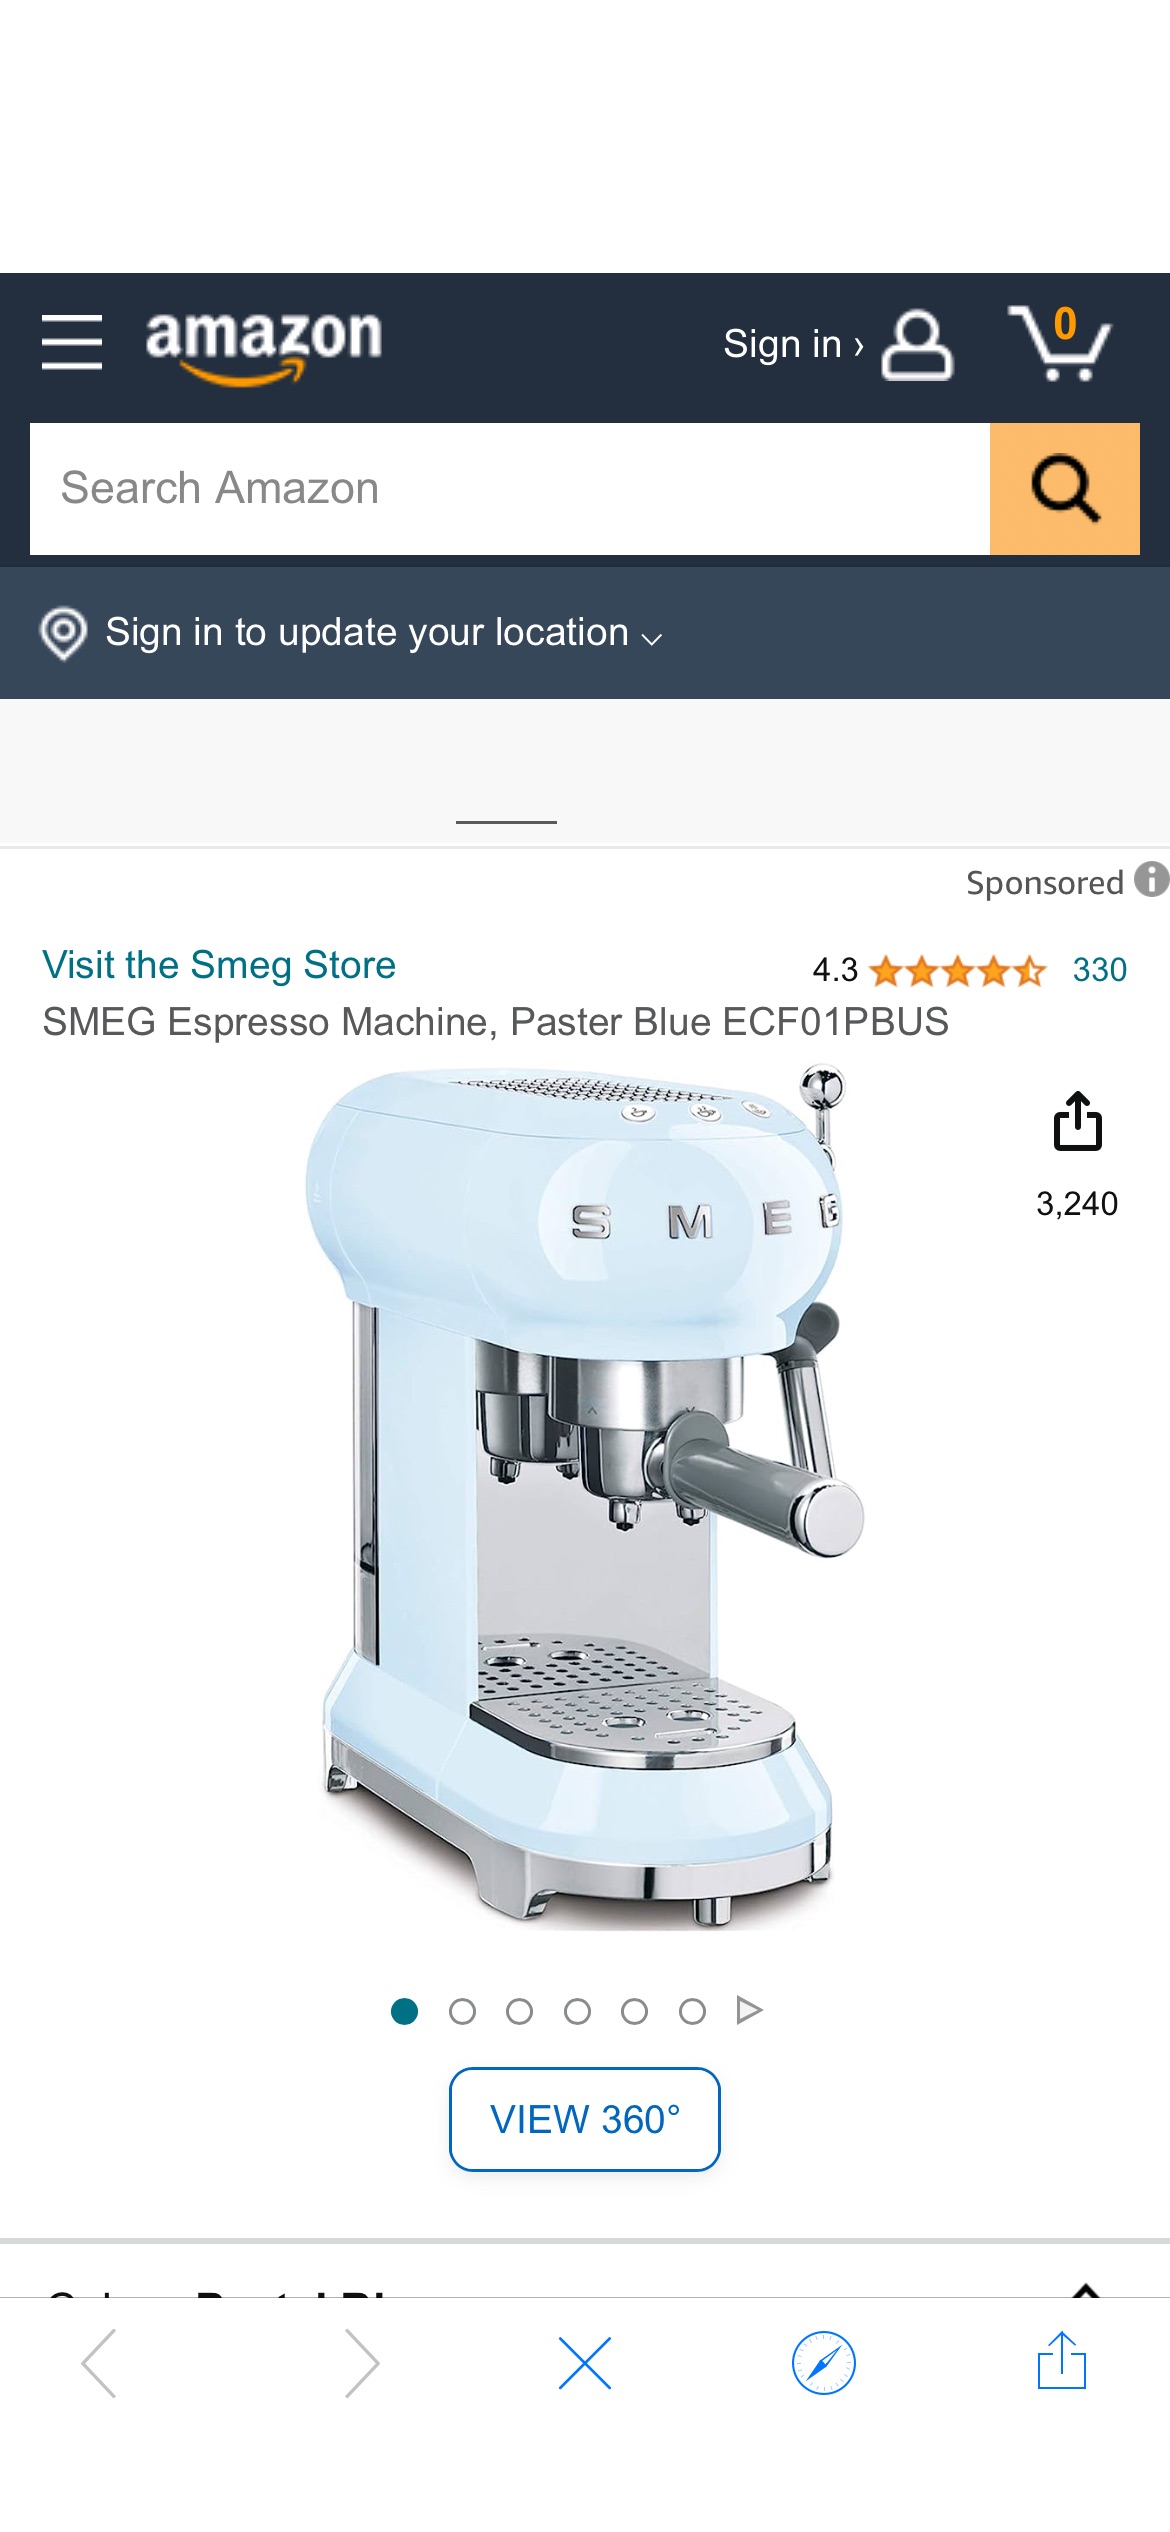 Amazon.com: SMEG Espresso Machine, Paster Blue ECF01PBUS: Home & Kitchen